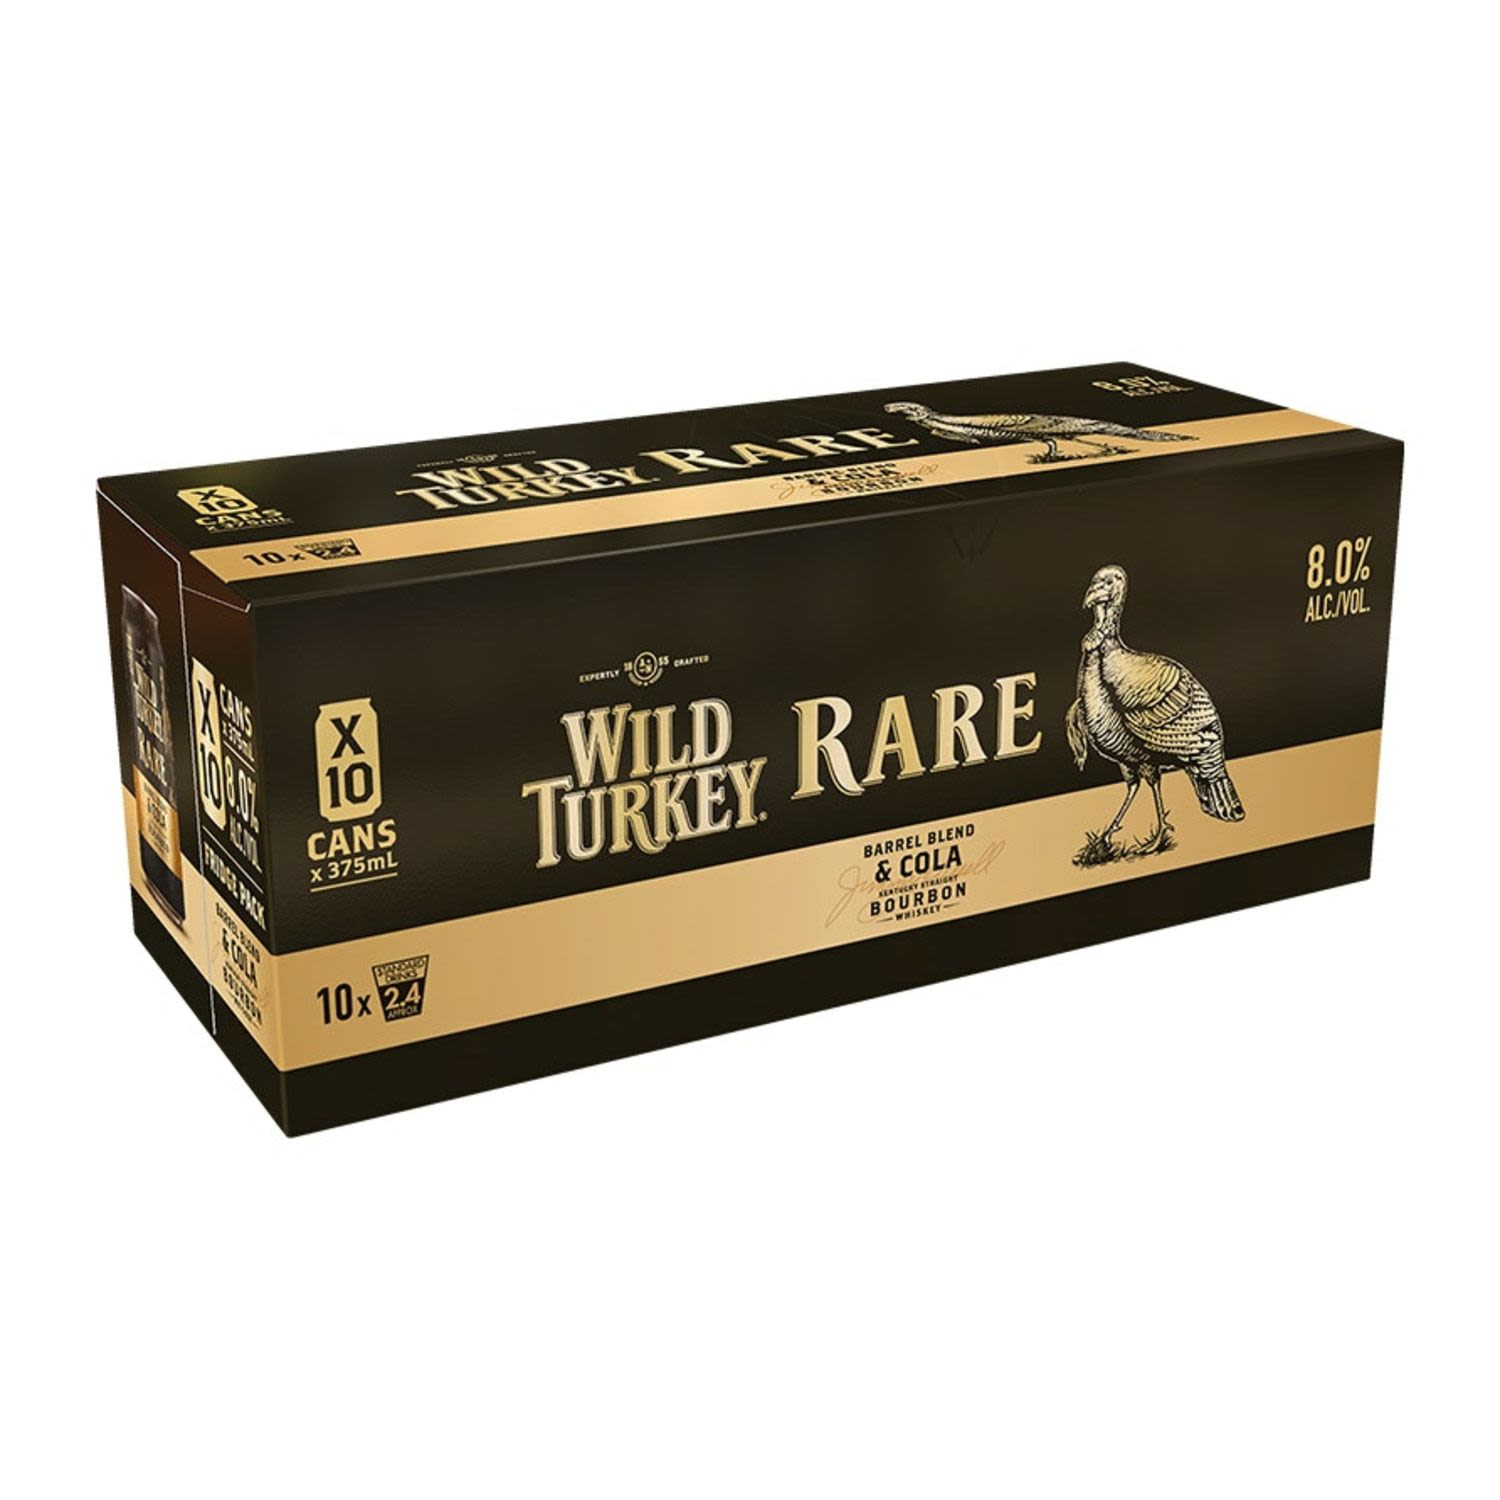 Wild Turkey Rare & Cola 8% Can 375mL 10 Pack